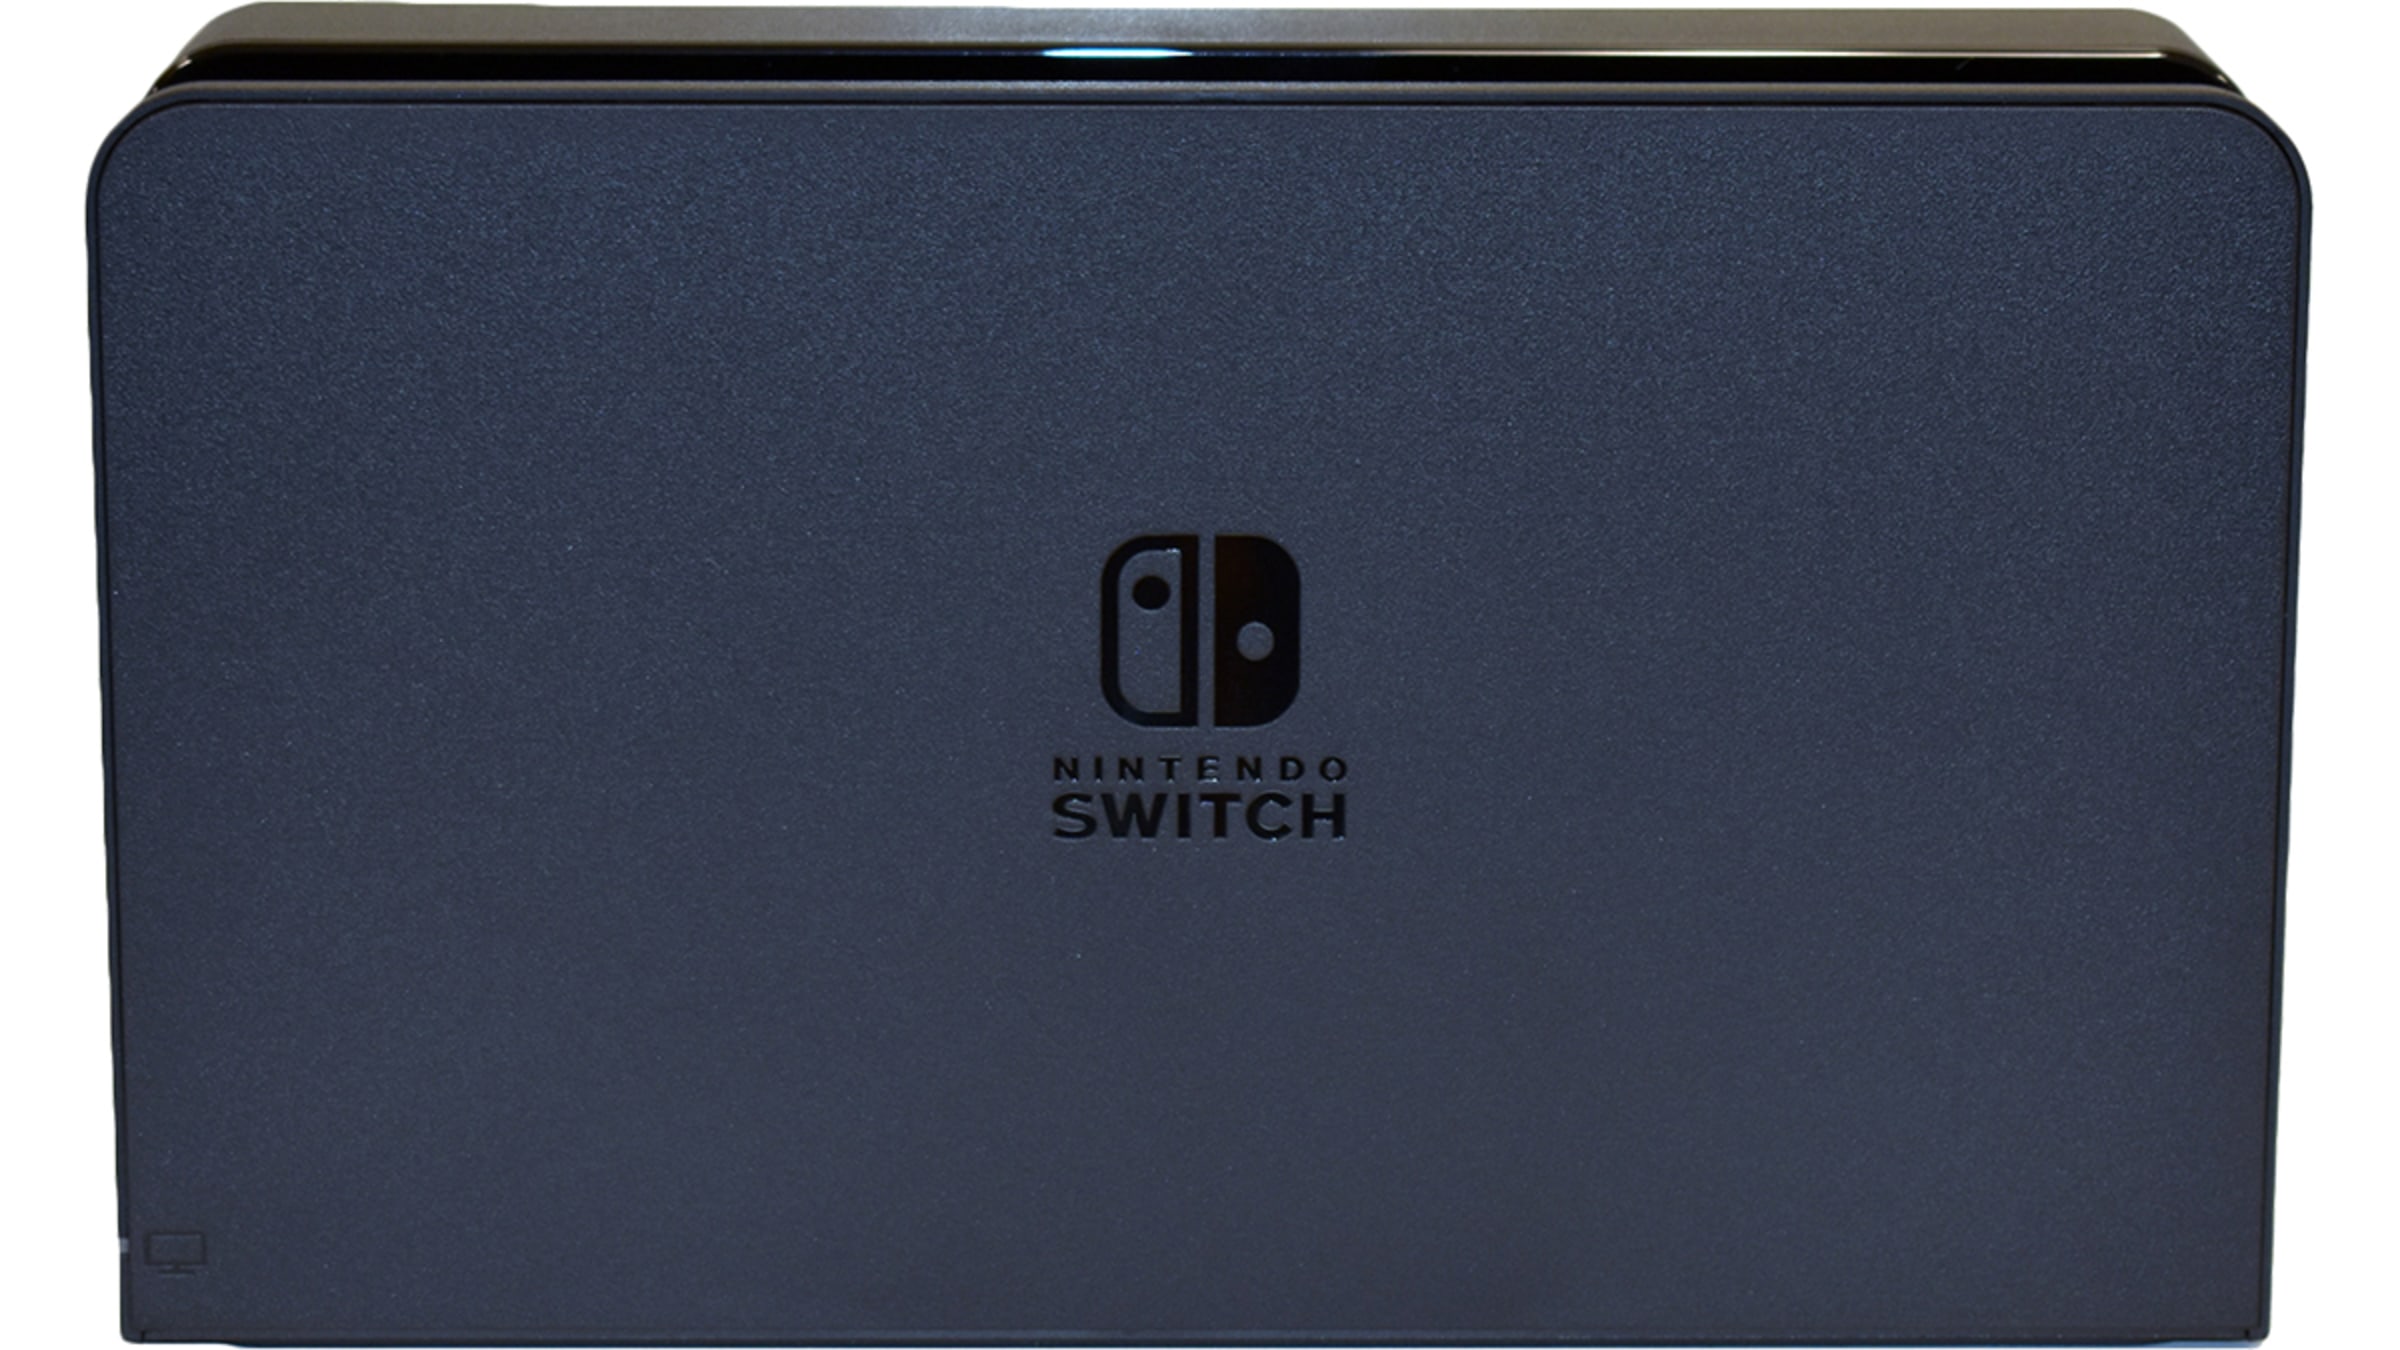 Dock for OLED Model - Black - Hardware - Nintendo - Nintendo Official Site